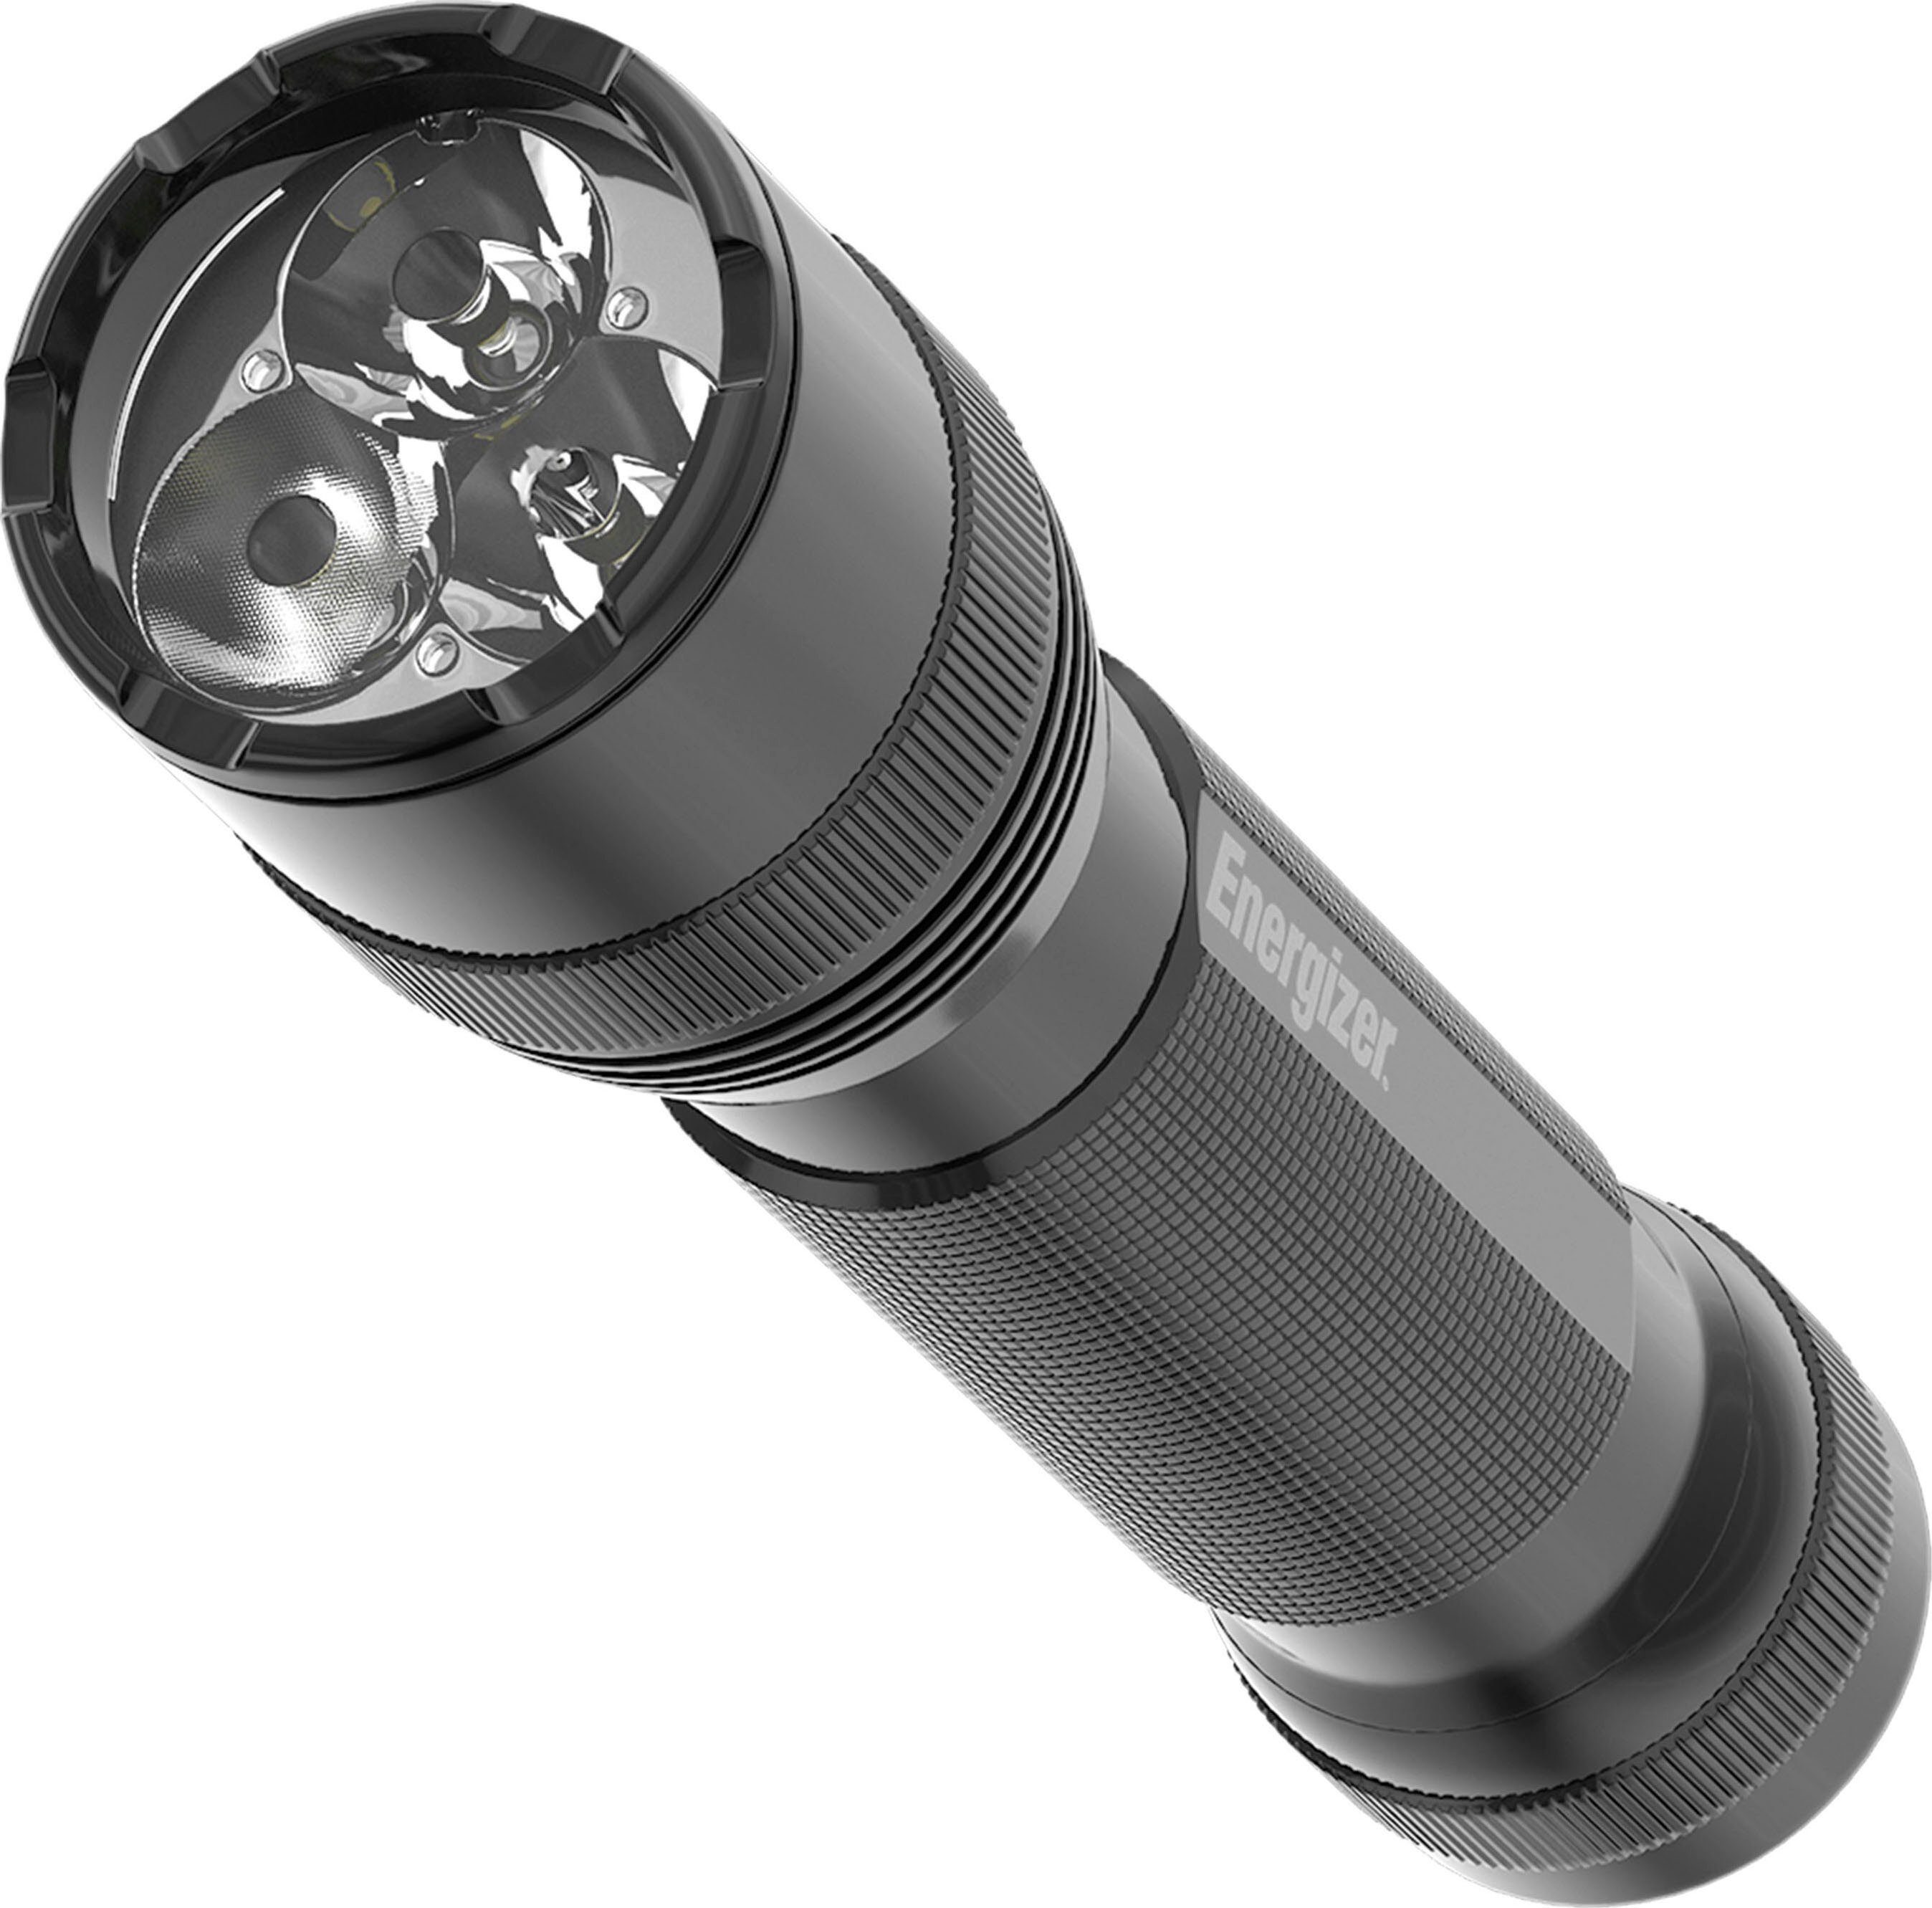 Energizer Metal Hybrid Tactical Taschenlampe